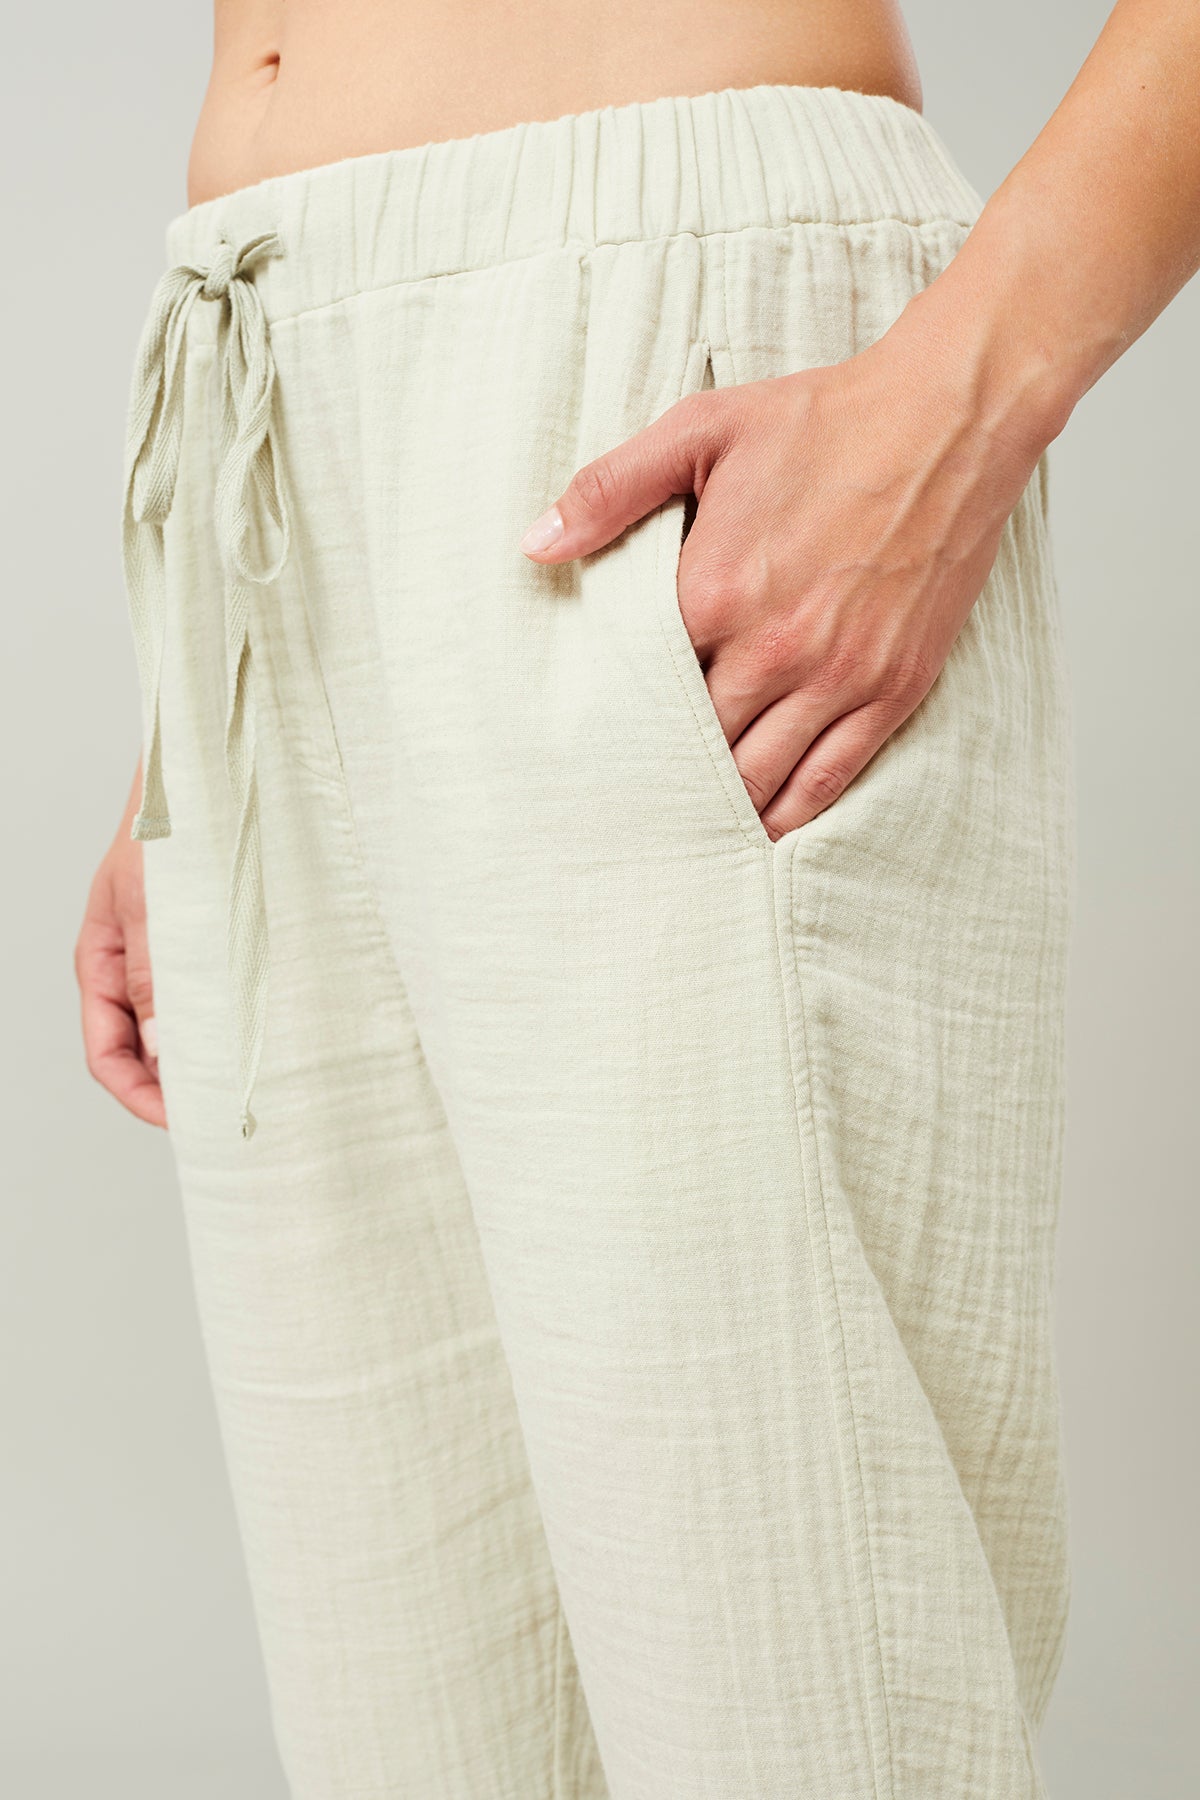 Kimono + Track Pants (Matcha)